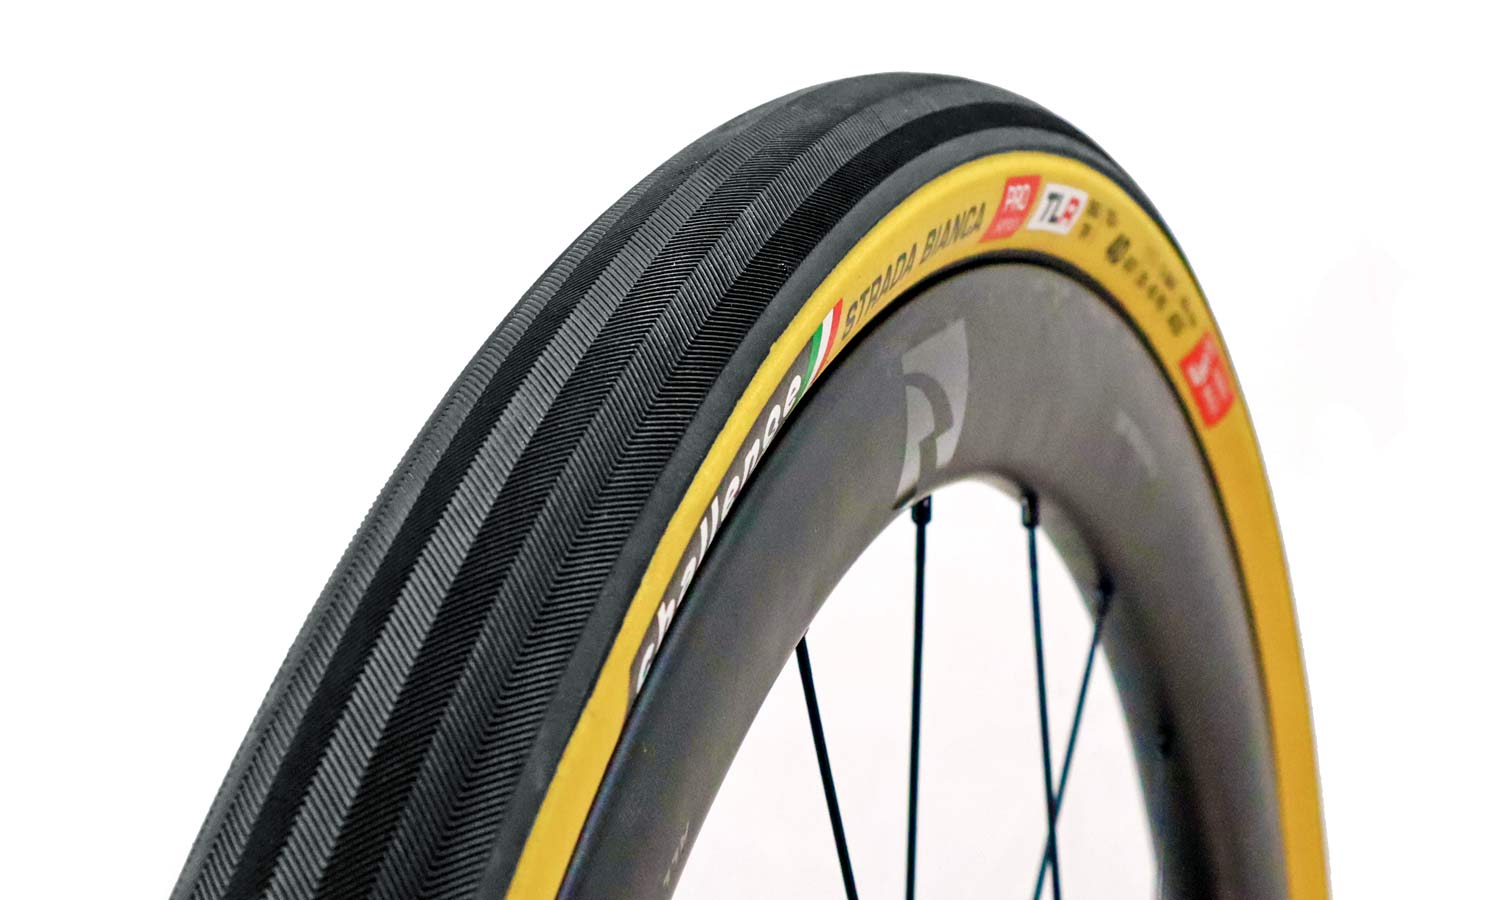 Challenge Strada Bianca 40 gravel tire, 700c 40mm high-volume all-road gravel bike tire, studio